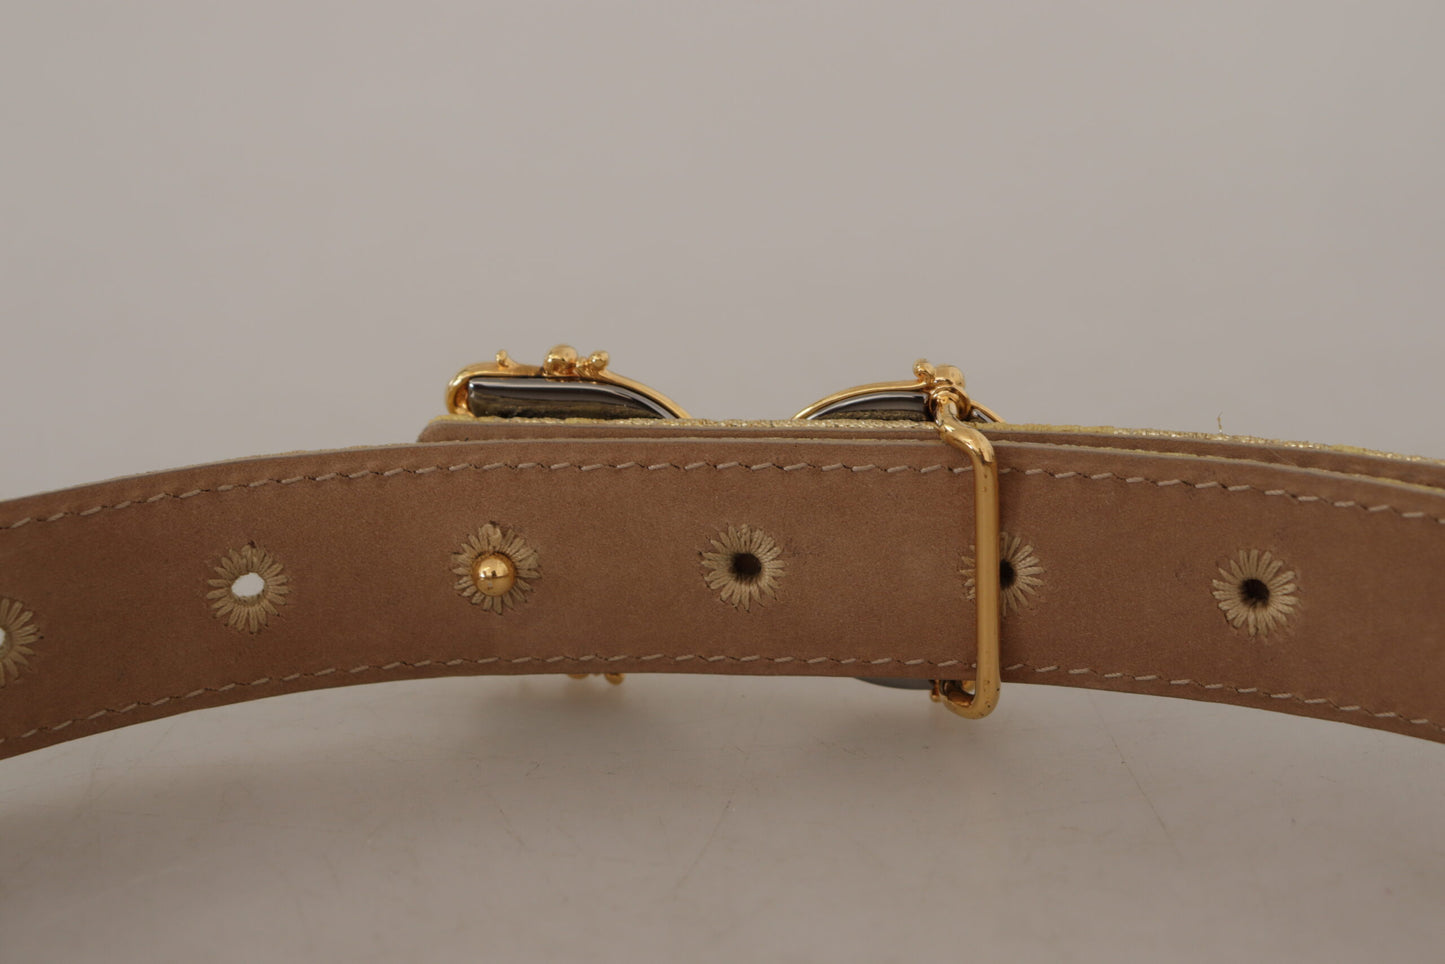 Elegant Gold-Tone Leather Belt